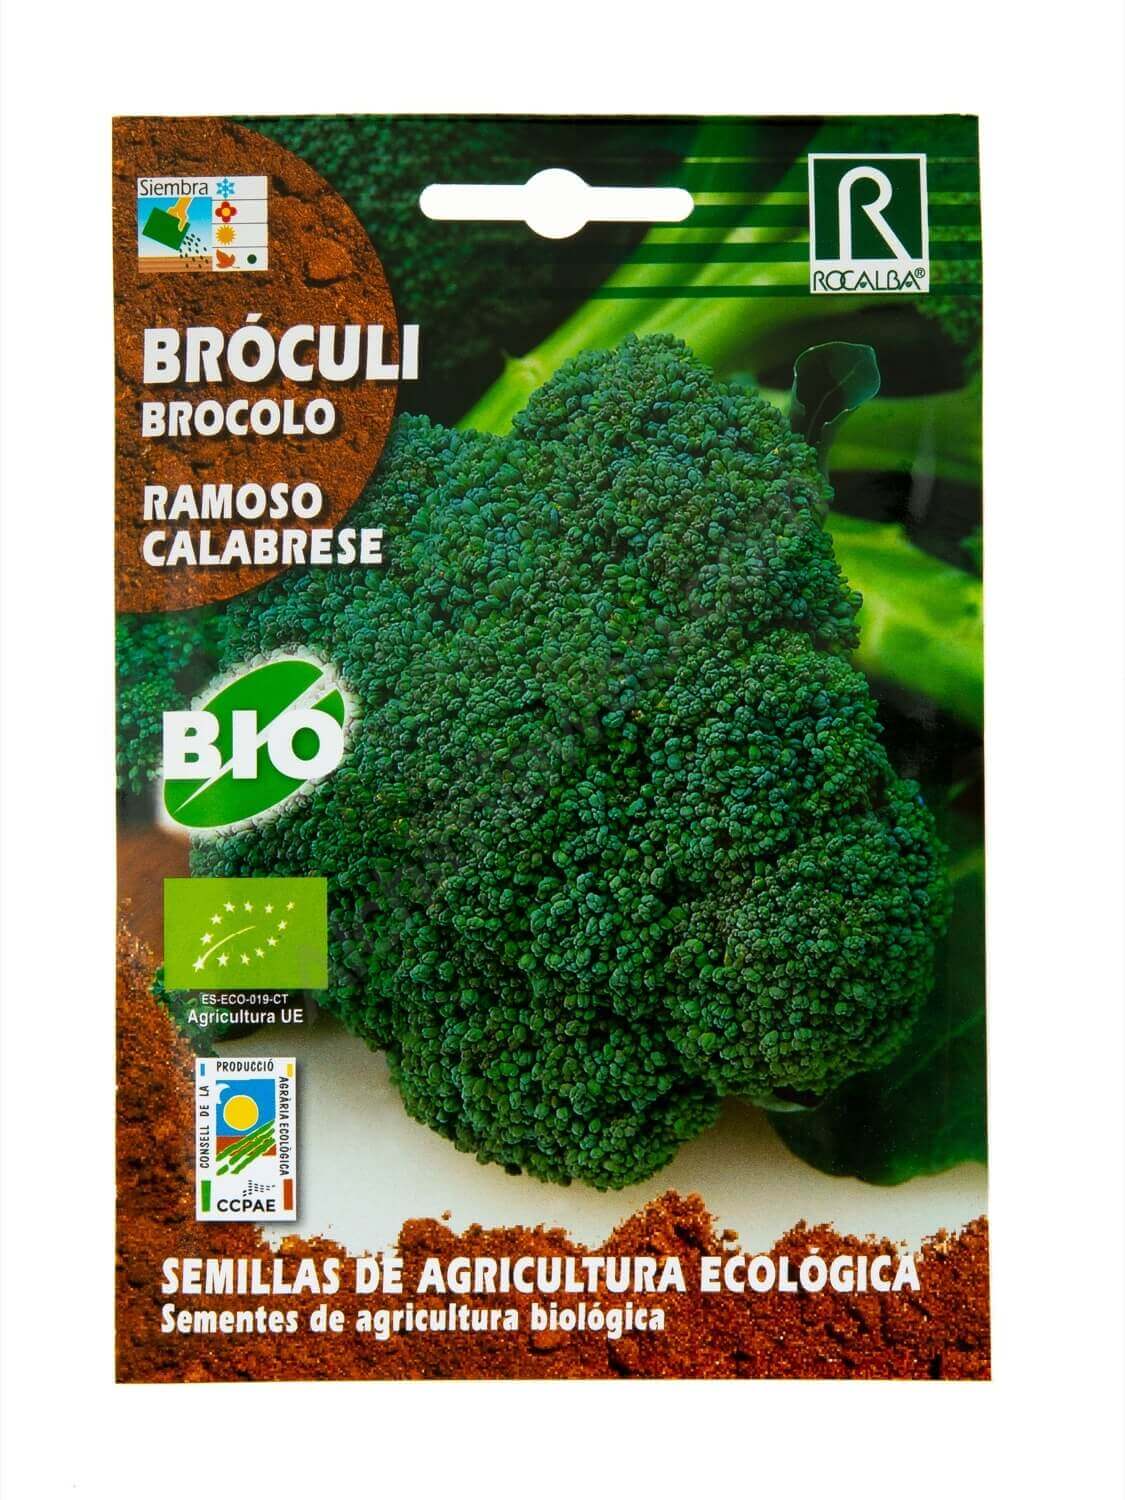 Rocalba Organic Ramoso Calabrese Broccoli